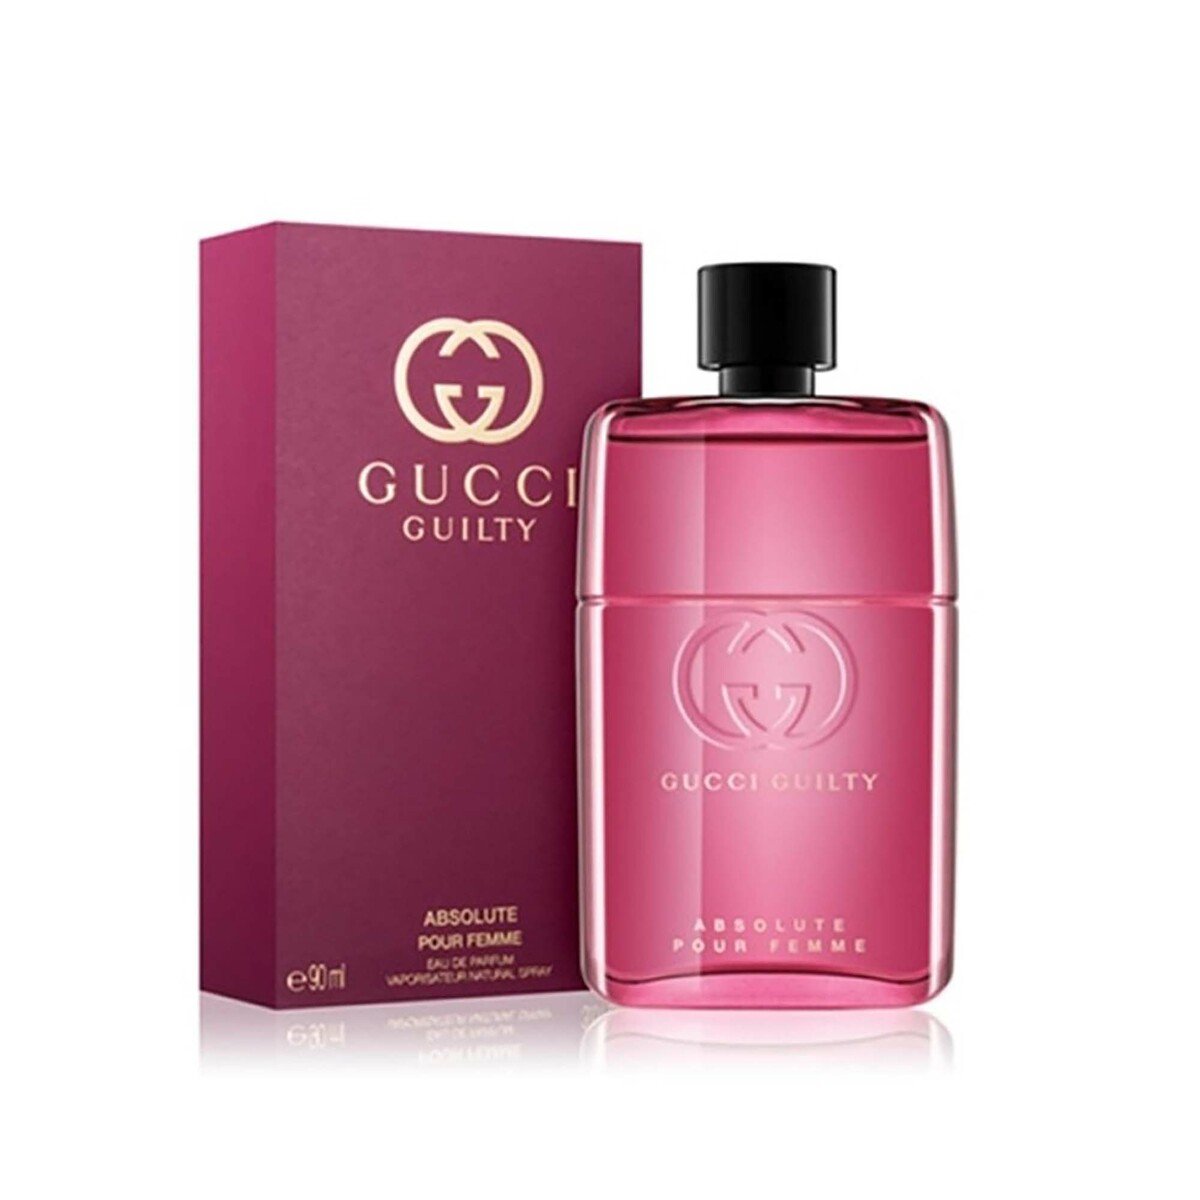 Gucci Guilty Absolute Eau De Parfum For Women 90ml Online at Best Price ...